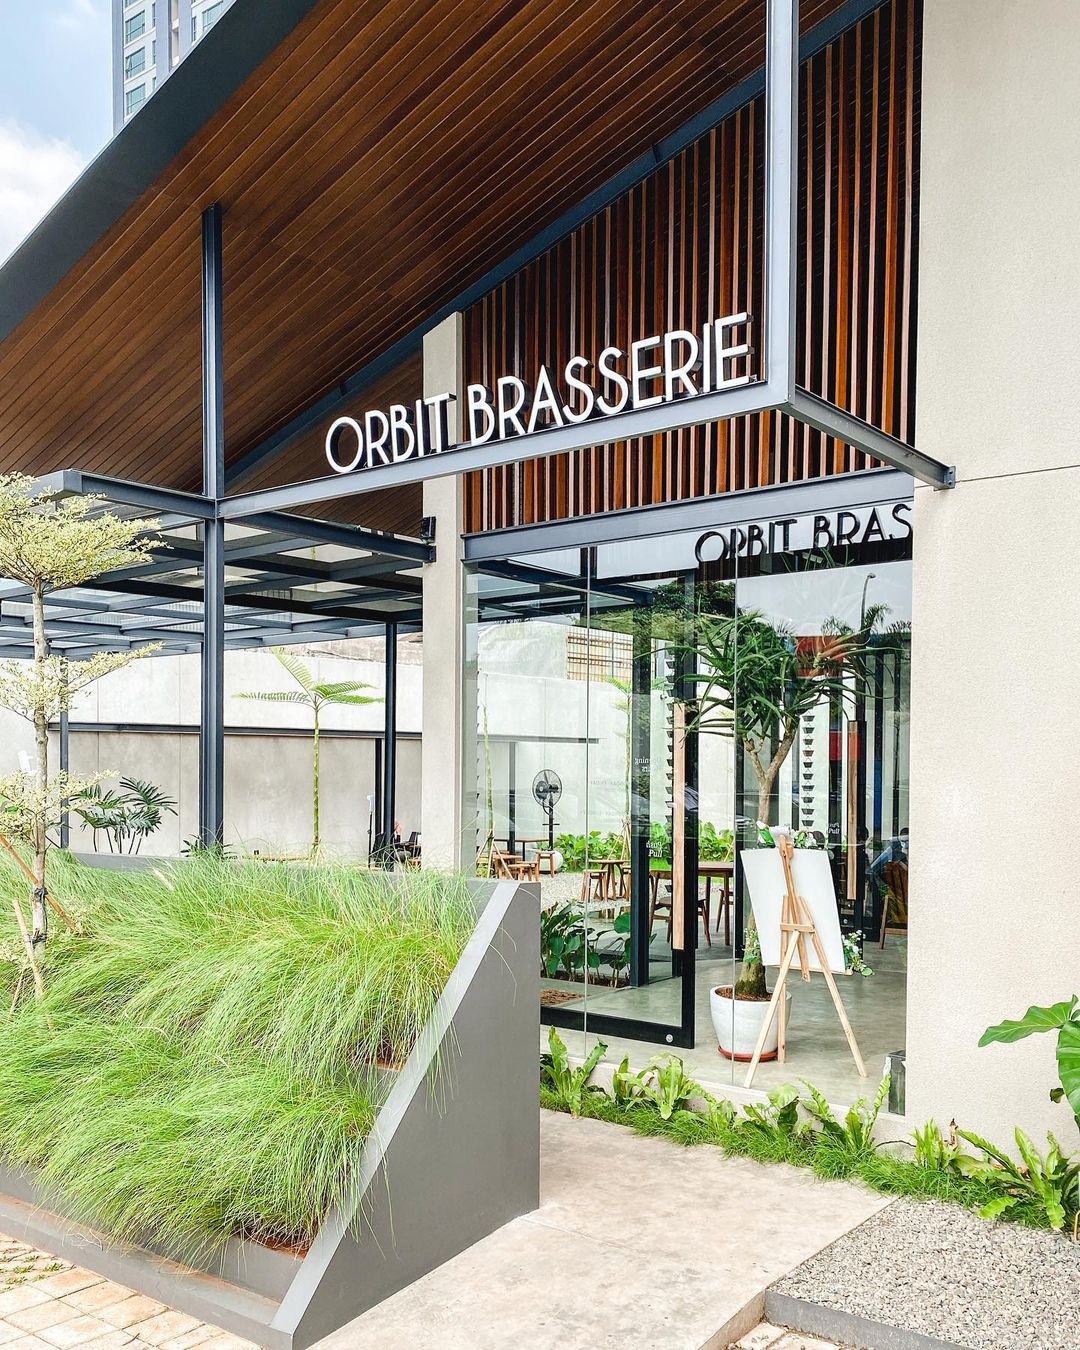 Cafe Orbit Brasserie Banten